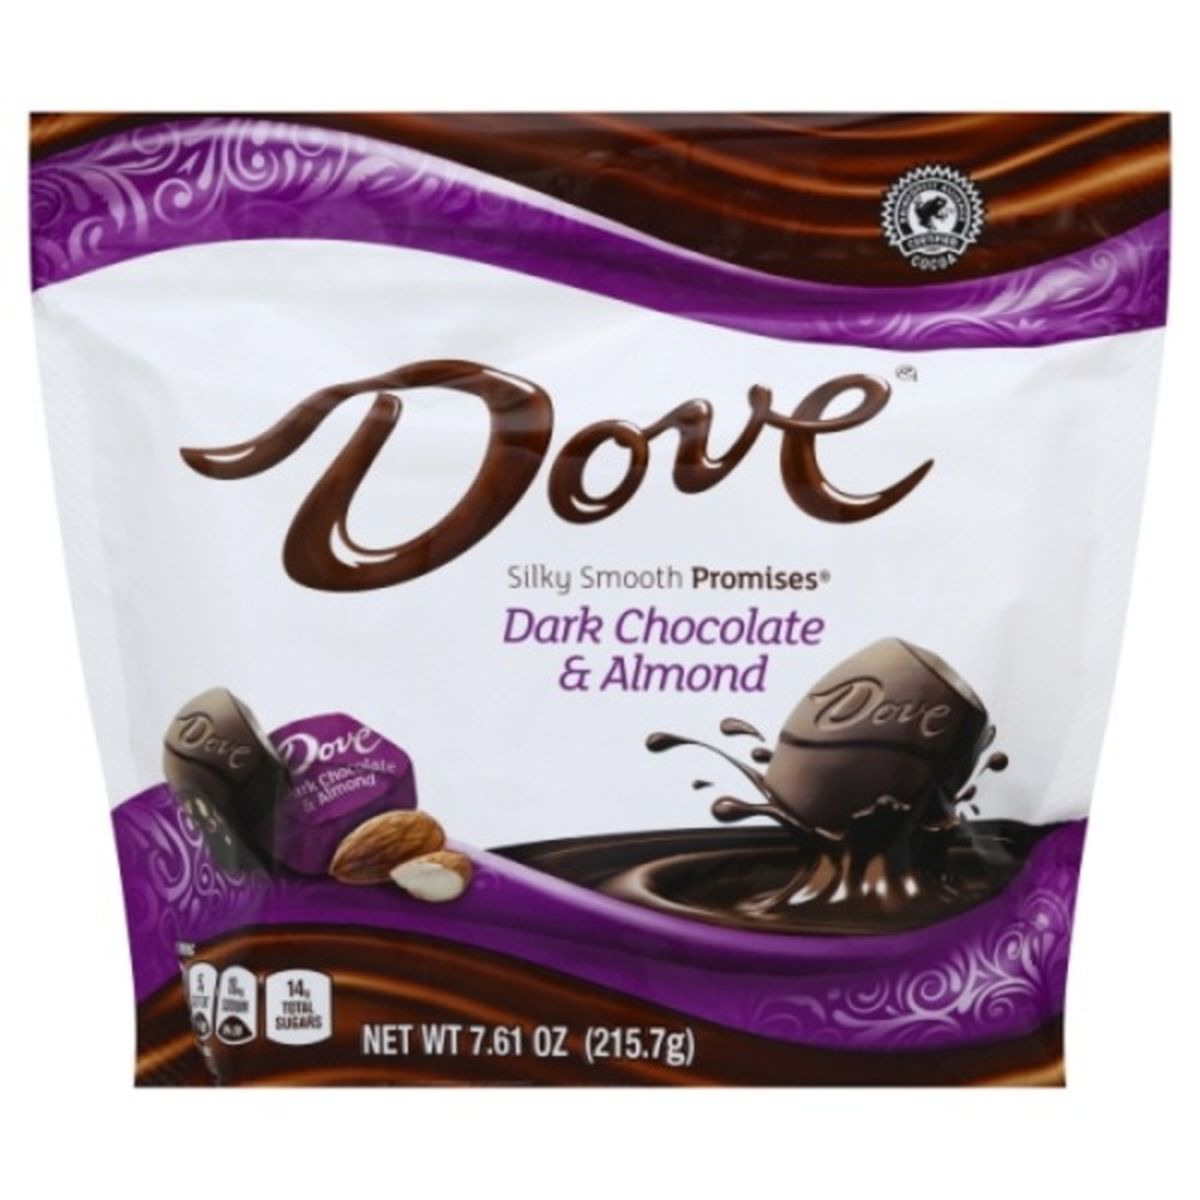 Calories in Dove Promises Dark Chocolate, & Almond